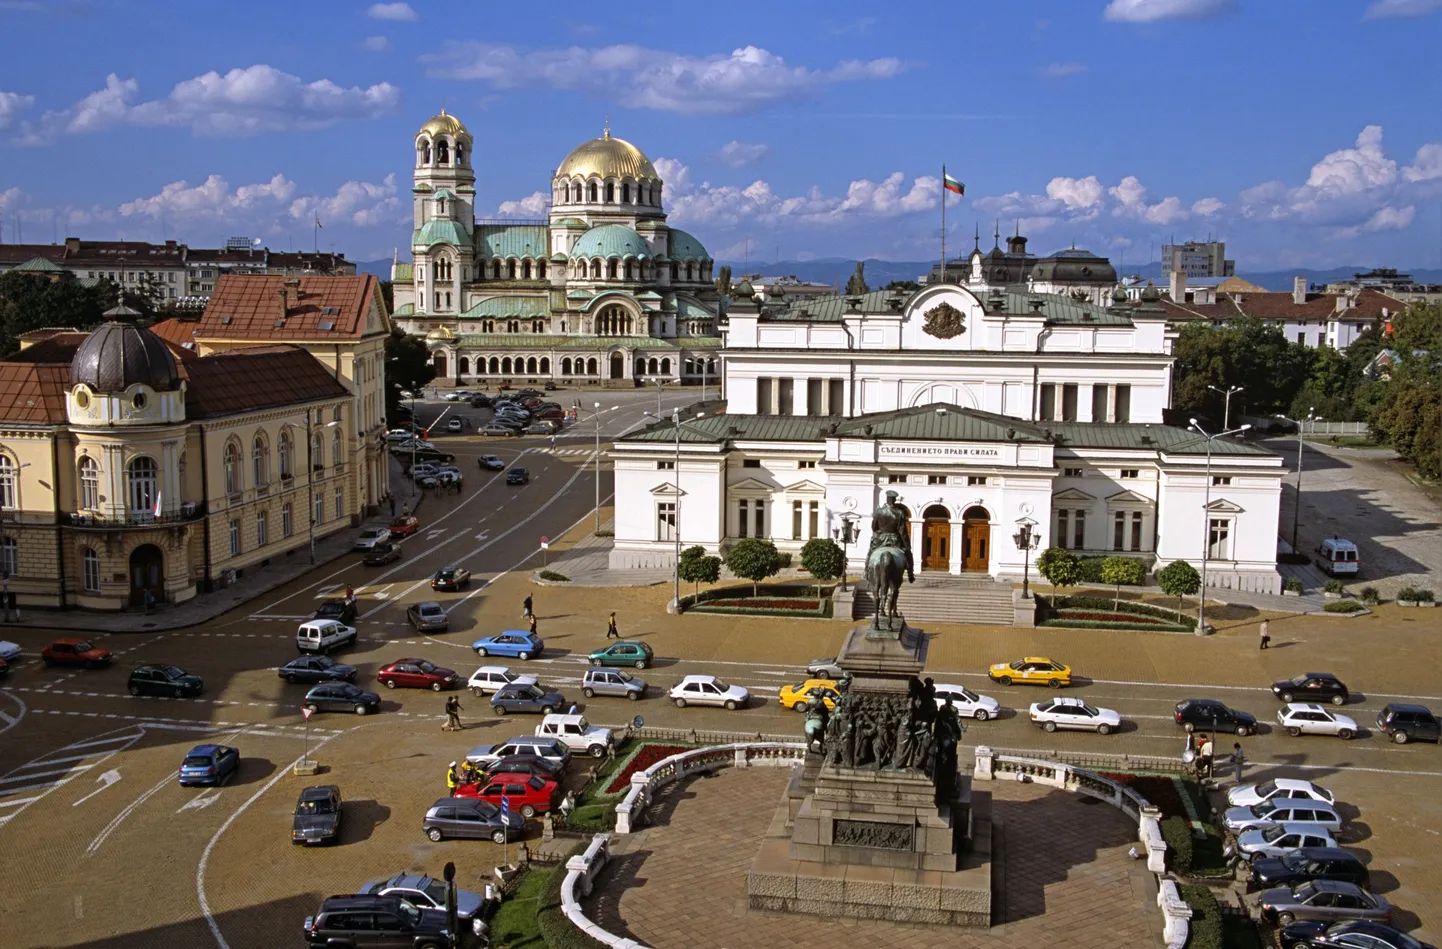 Sofia


ORIGINAL:

Liberation Monument, Bulgarian Parliament Building, Science Academy, and Alexander Nevsky Cathedral, Sofia, Bulgaria